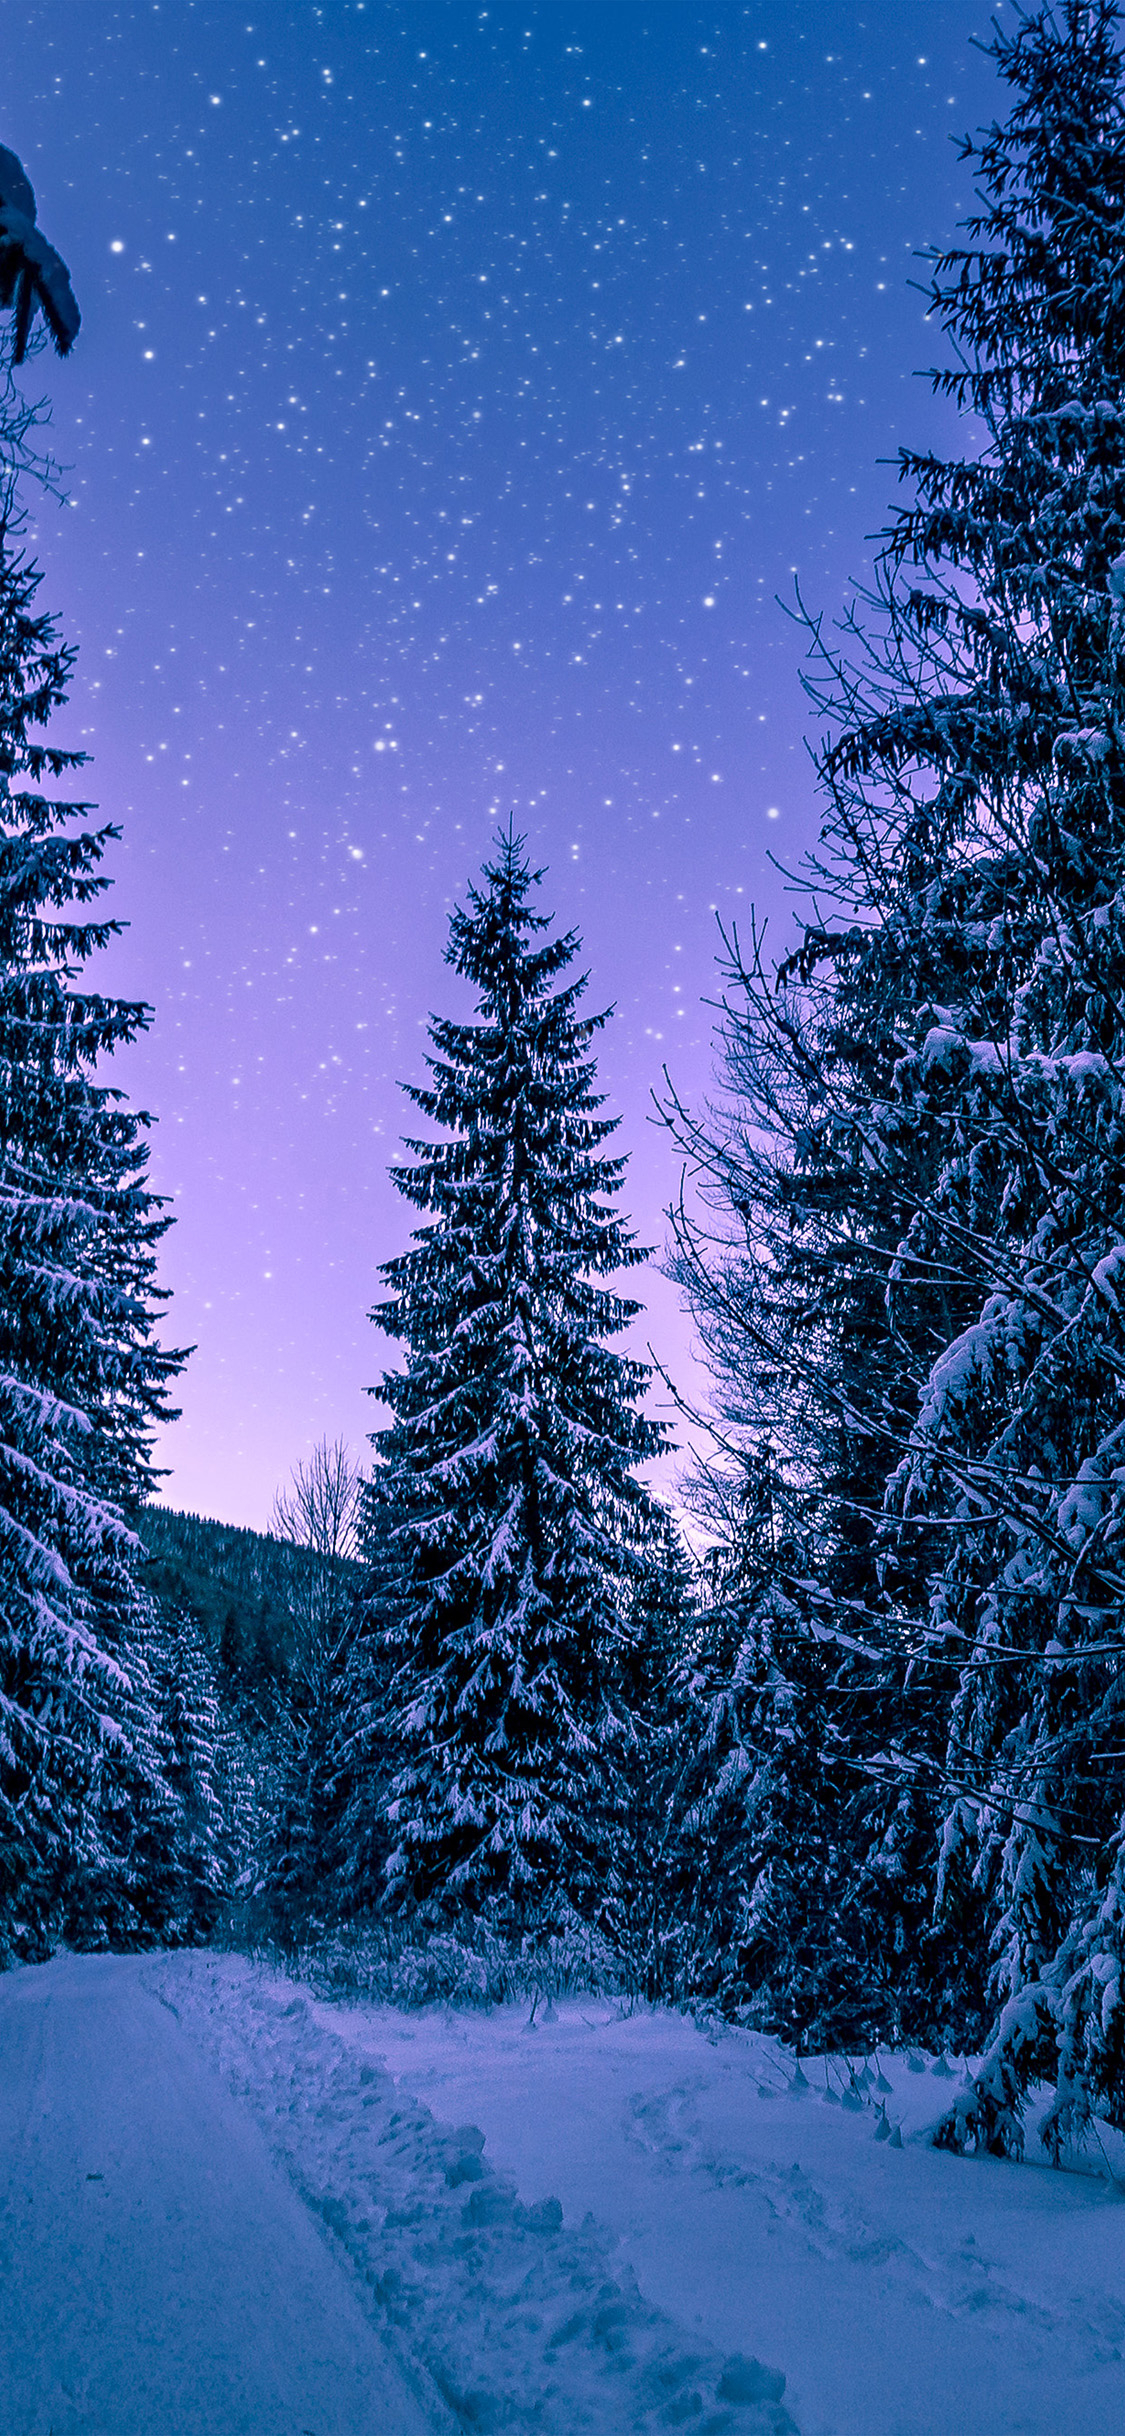 1125x2436 | iPhone11 wallpaper | nx97-snow-winter-wood-treeroad-night-nature